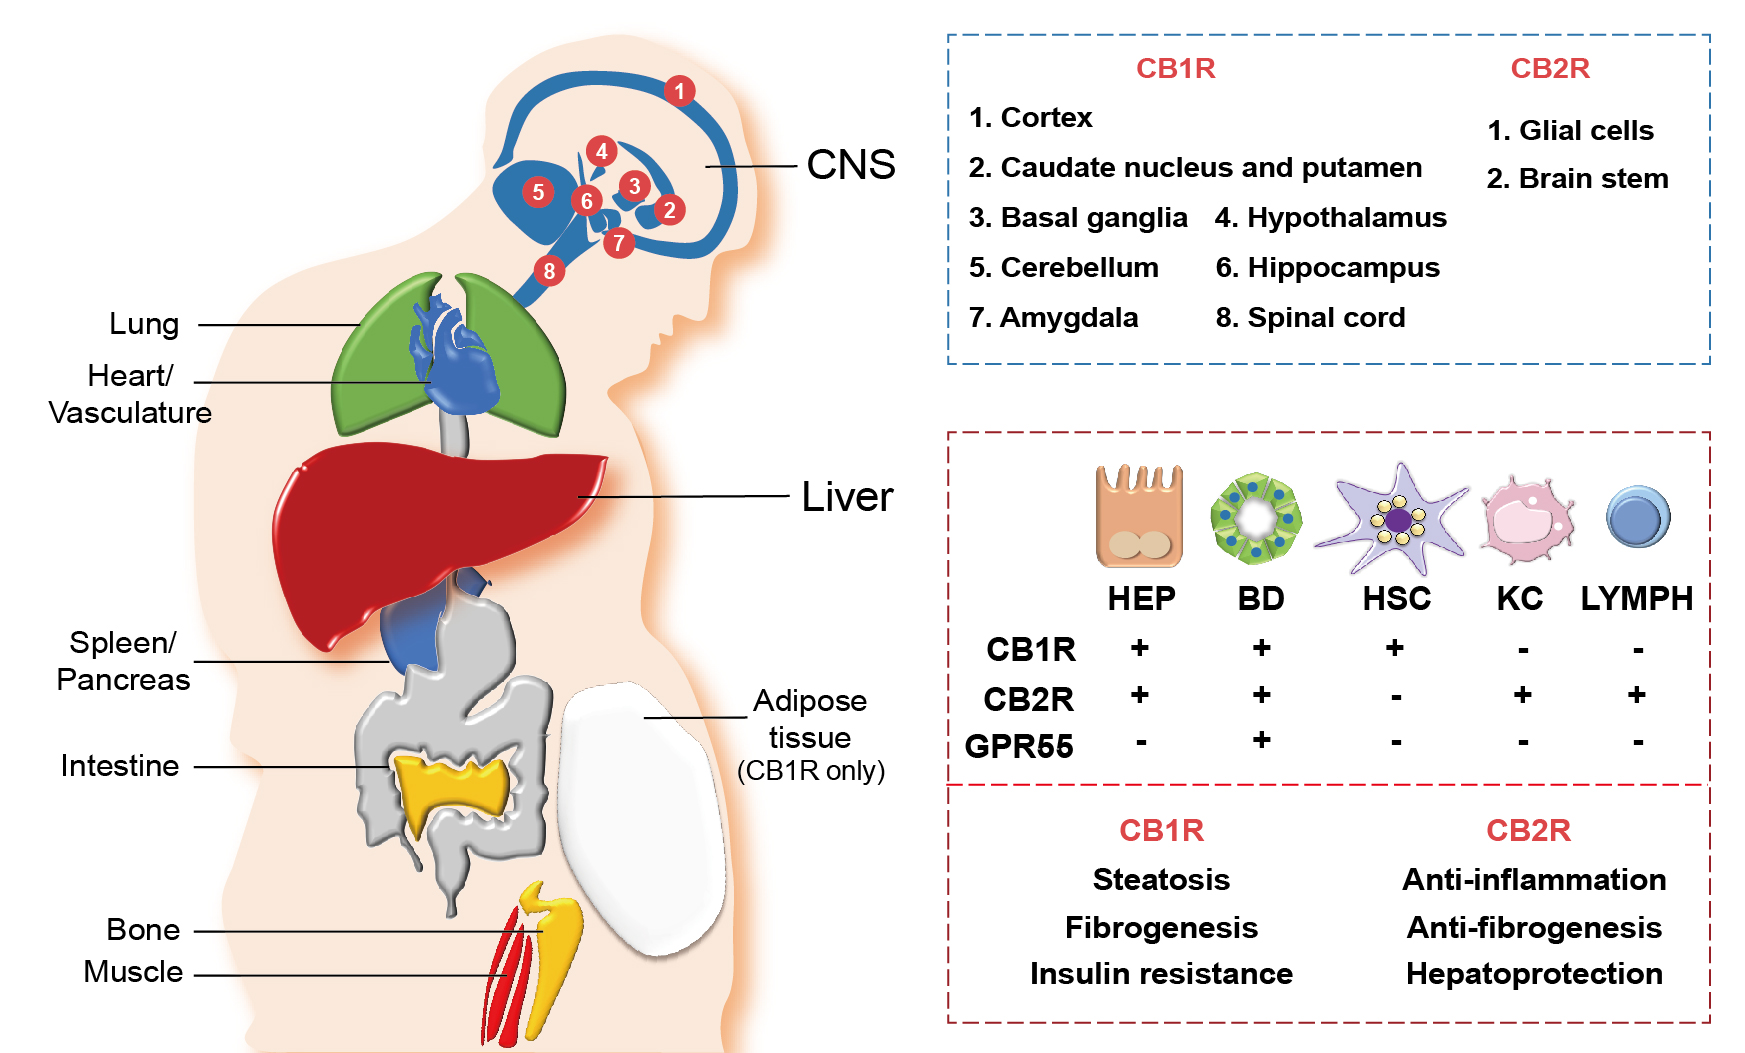 Distribution of cannabinoid receptors in various organs and hepatic cells.